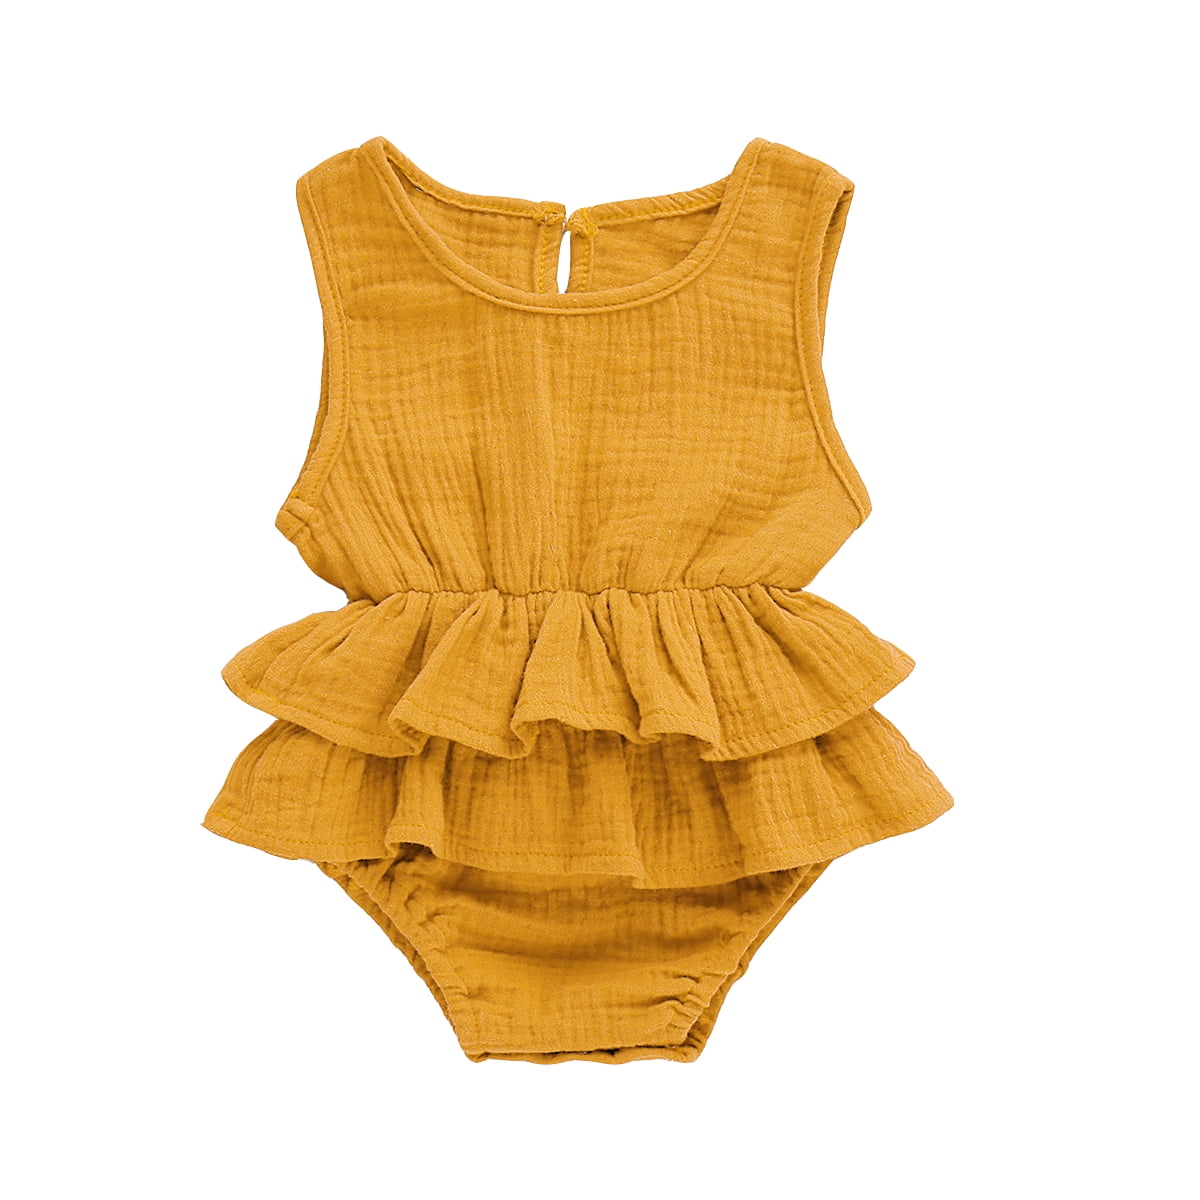 Madjtlqy Newborn Baby Boy Girl Sleeveless Romper Jumpsuit Bodysuit 0-18M Infant Summer Ribbed Knit Clothes